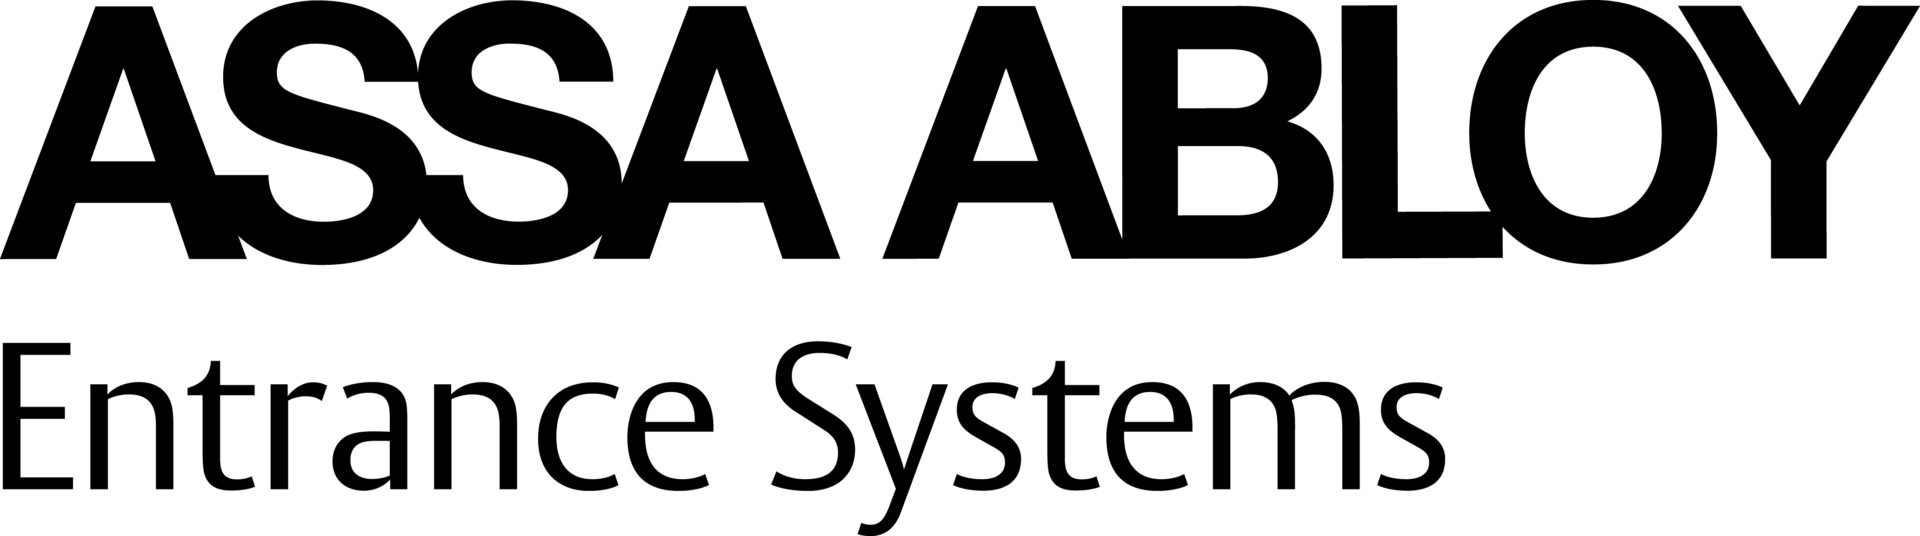 ASSA-ABLOY_Entrance_Systems_Black